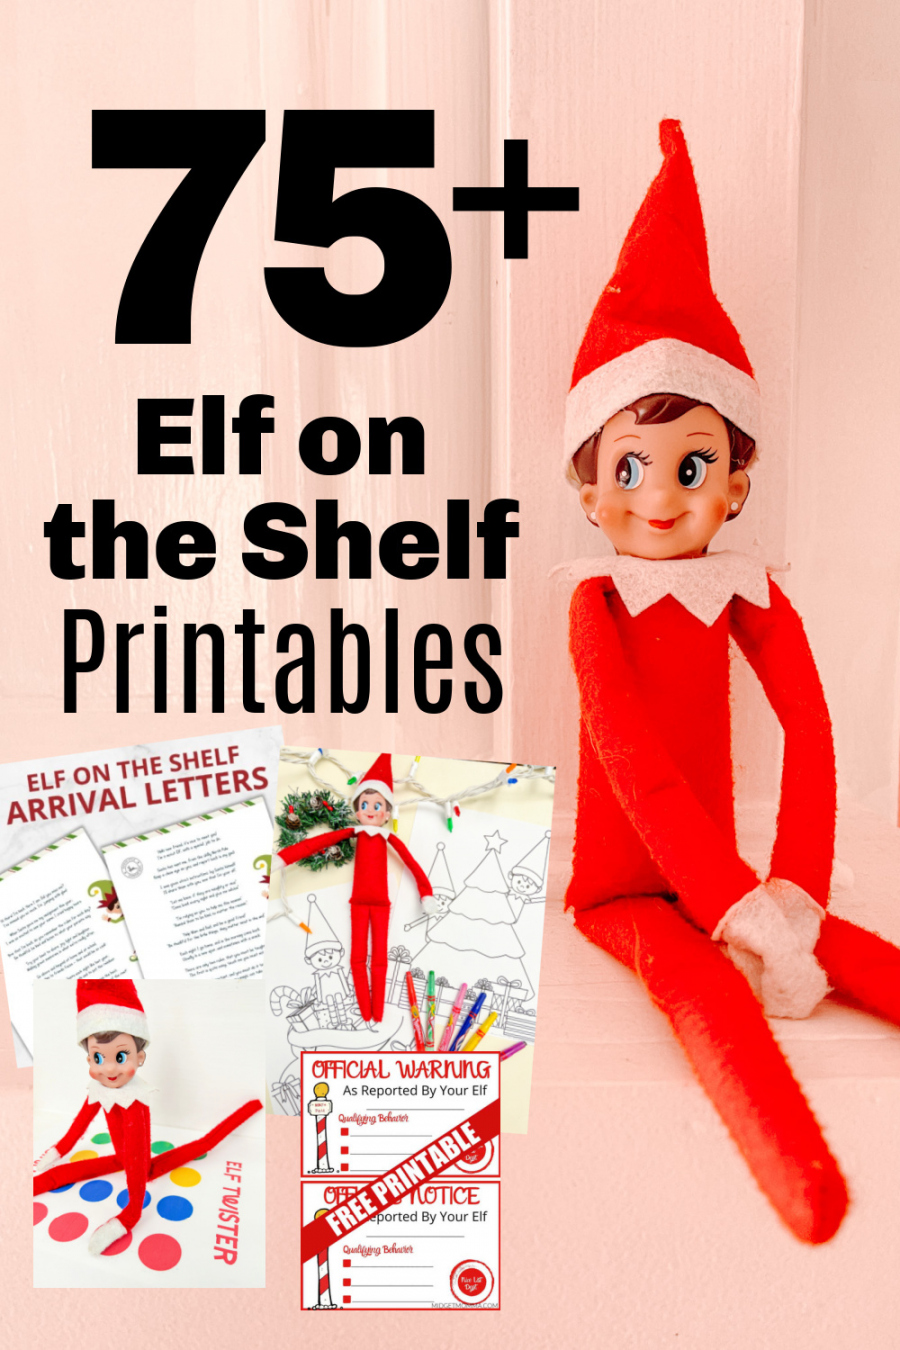 Elf On The Shelf Free Printables - Printable - Ultimate List of FREE Elf on the Shelf Printables - Over